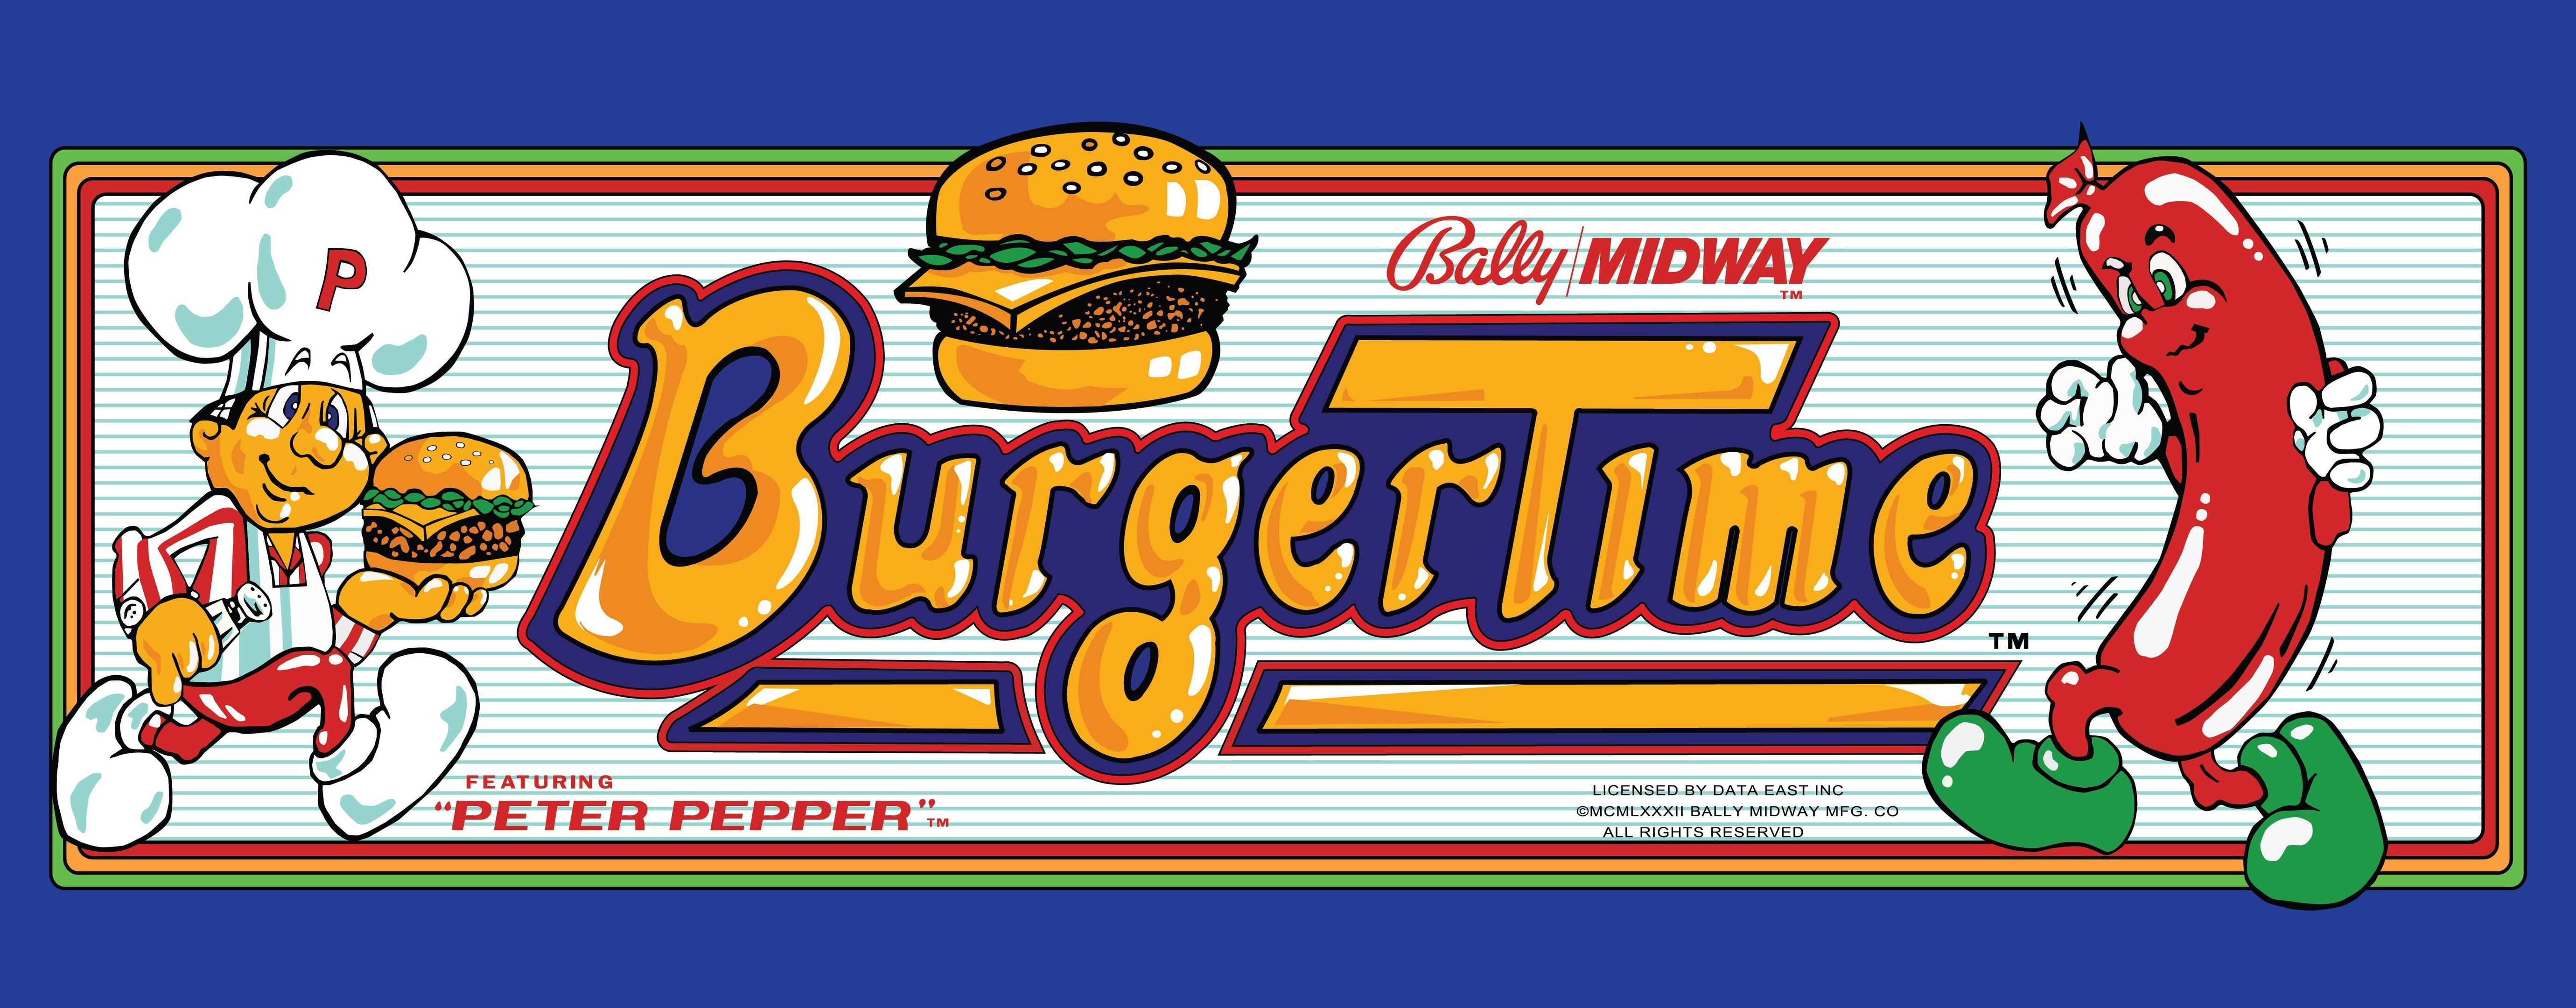 Burger Time HD wallpapers, Desktop wallpaper - most viewed